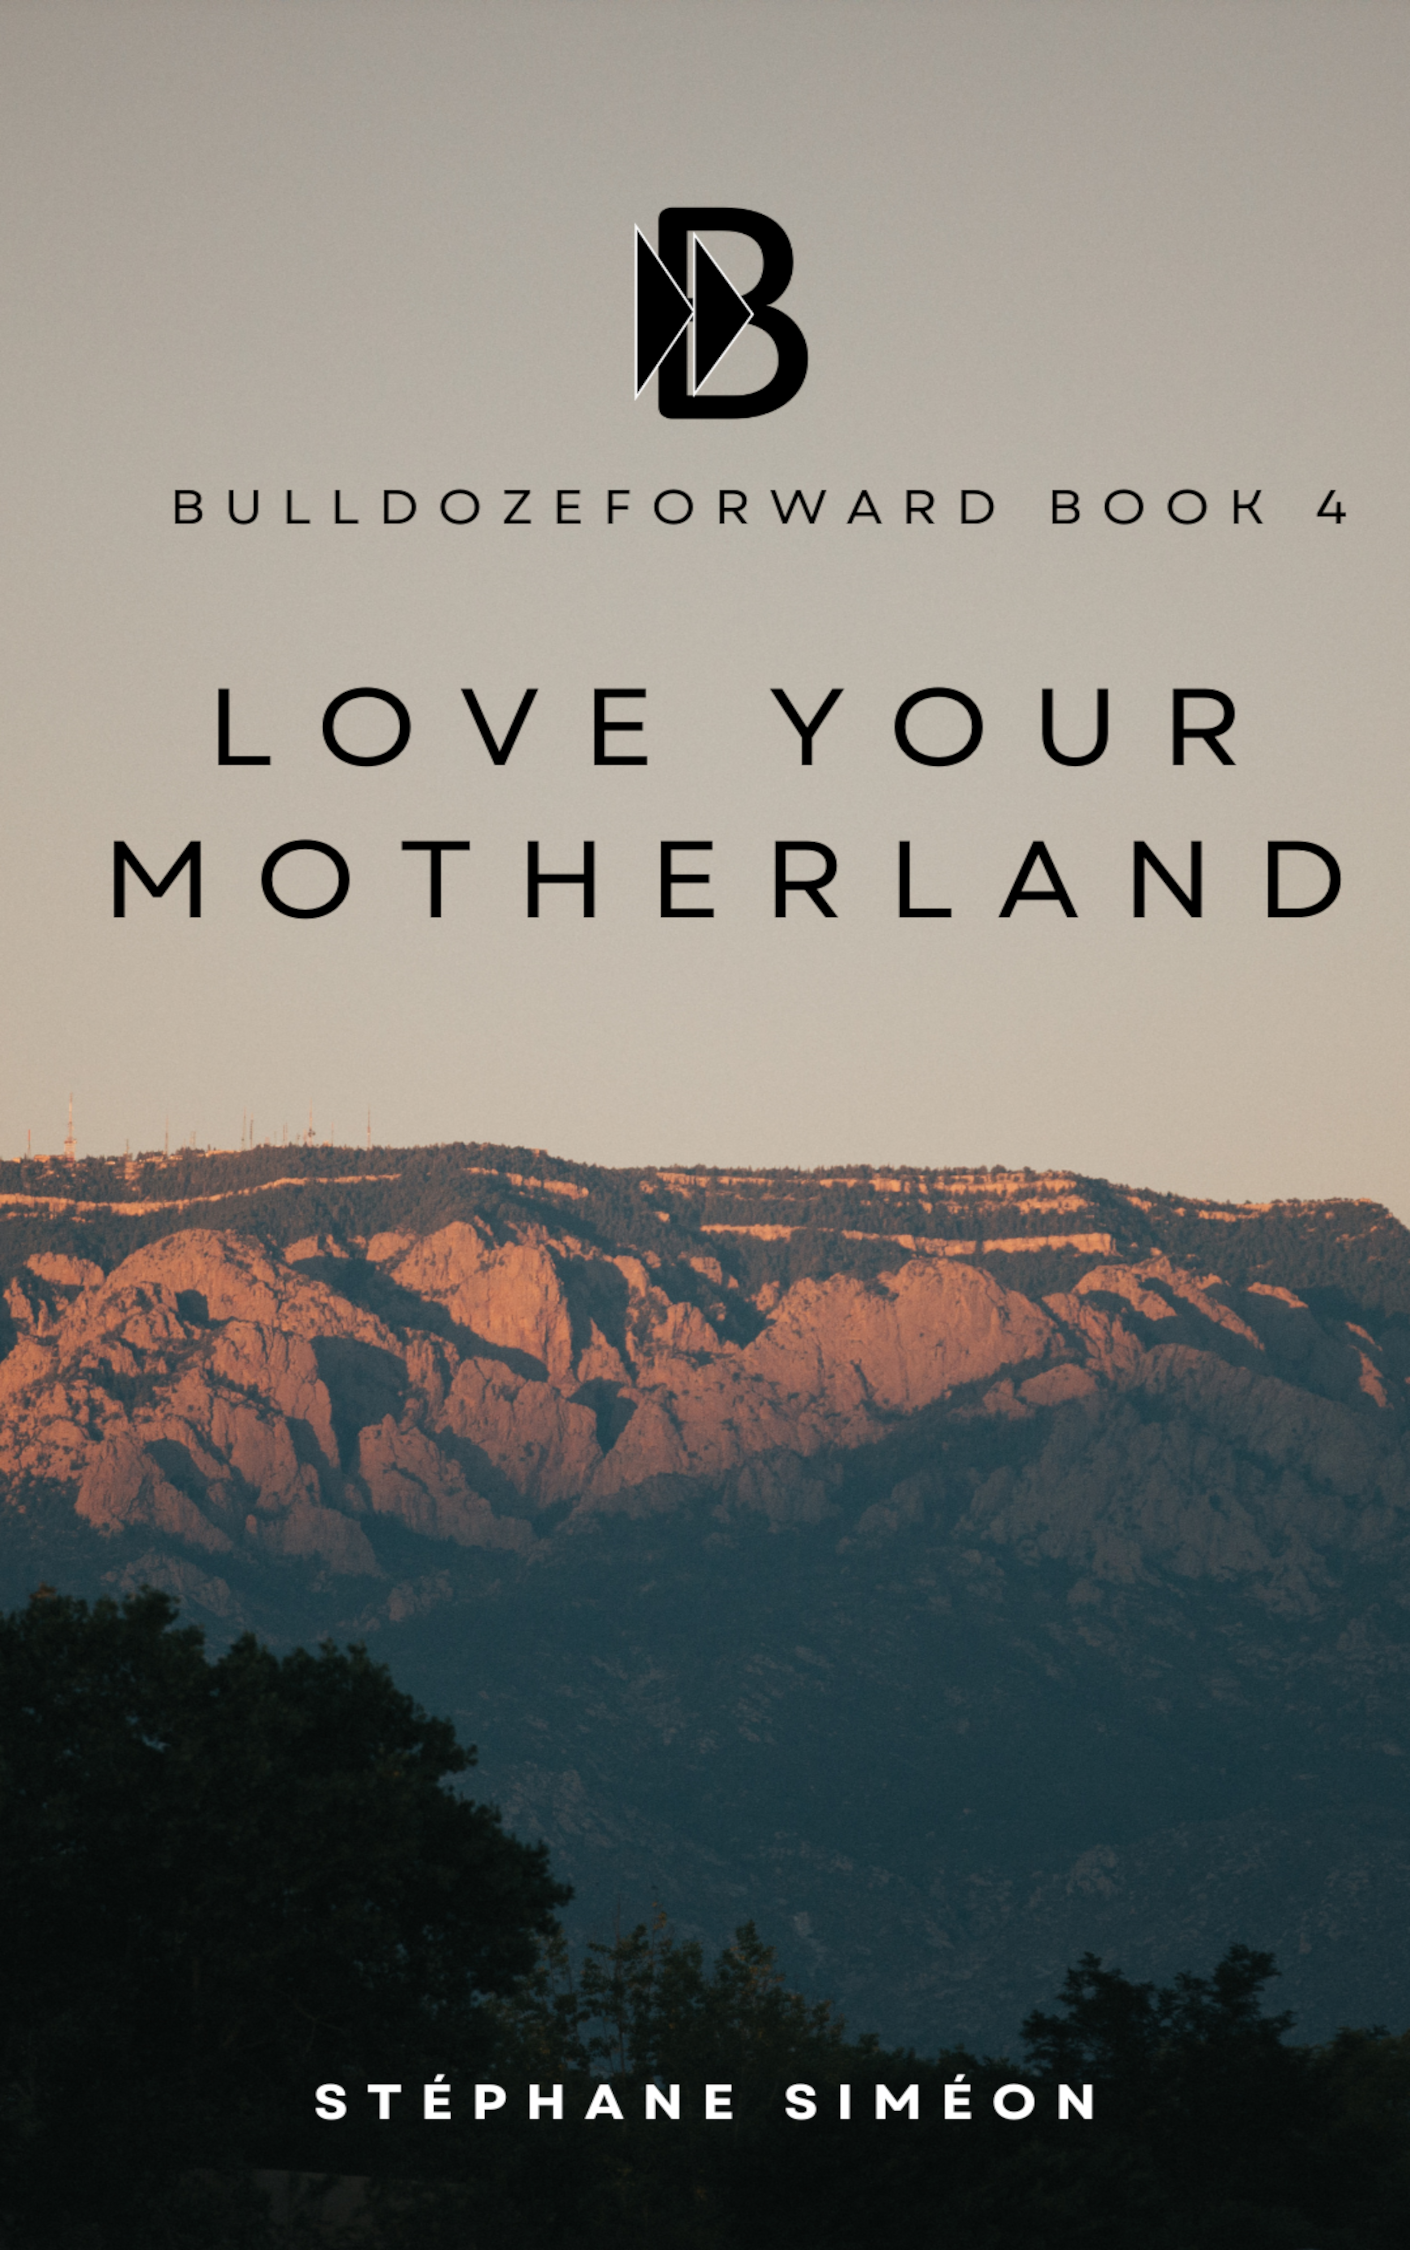 BulldozeForward Book 4 Love Your Motherland1.png